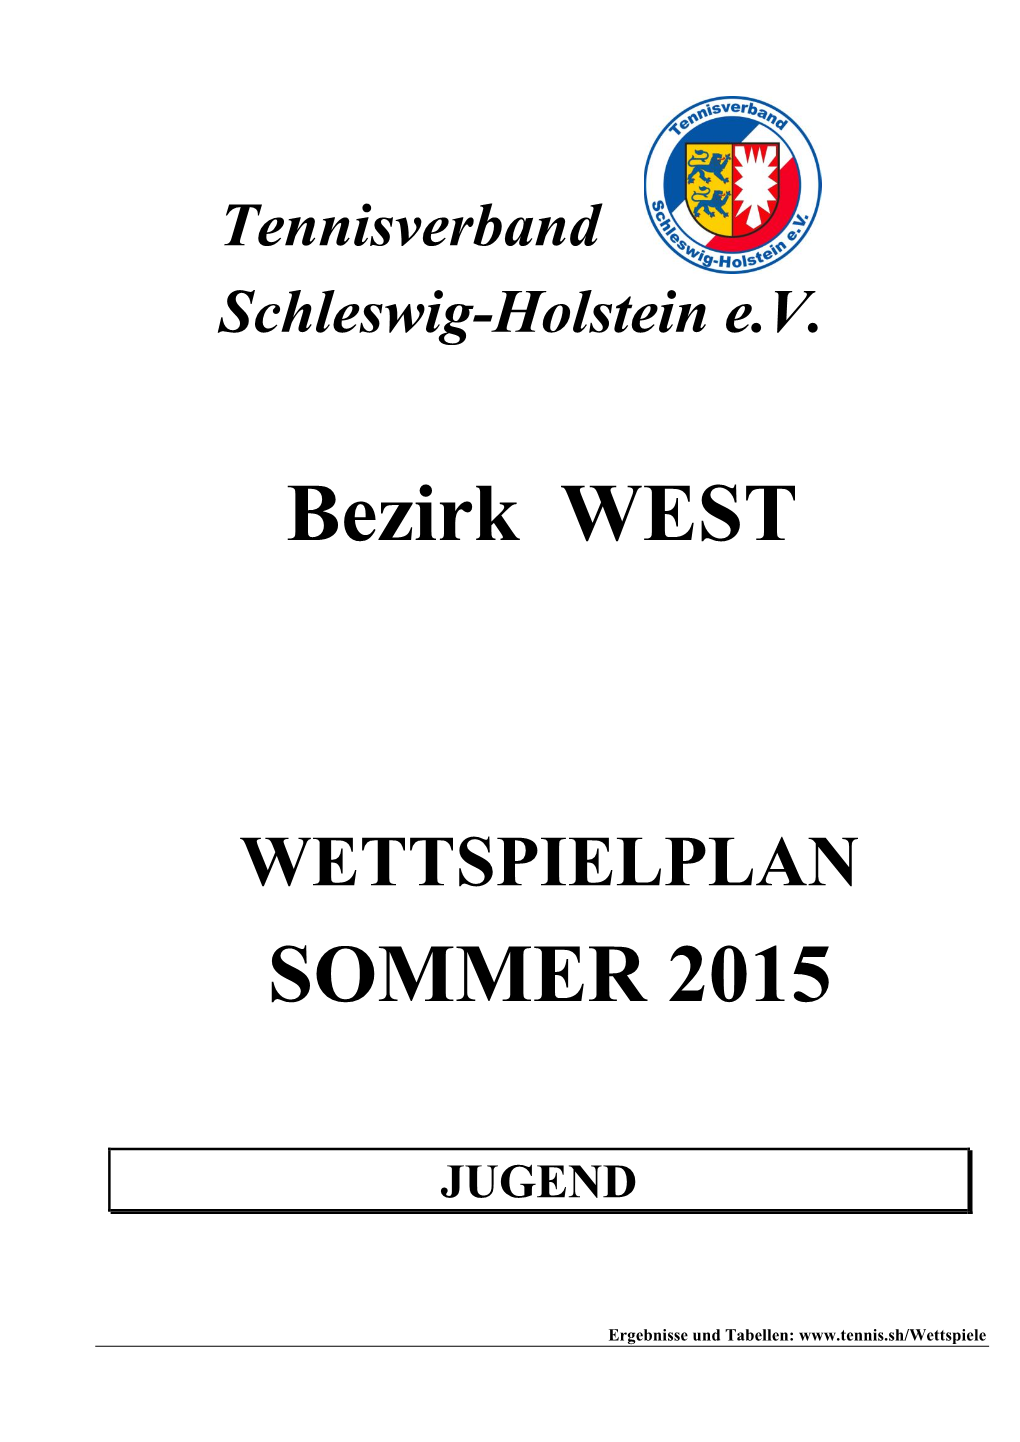 Bezirk WEST SOMMER 2015